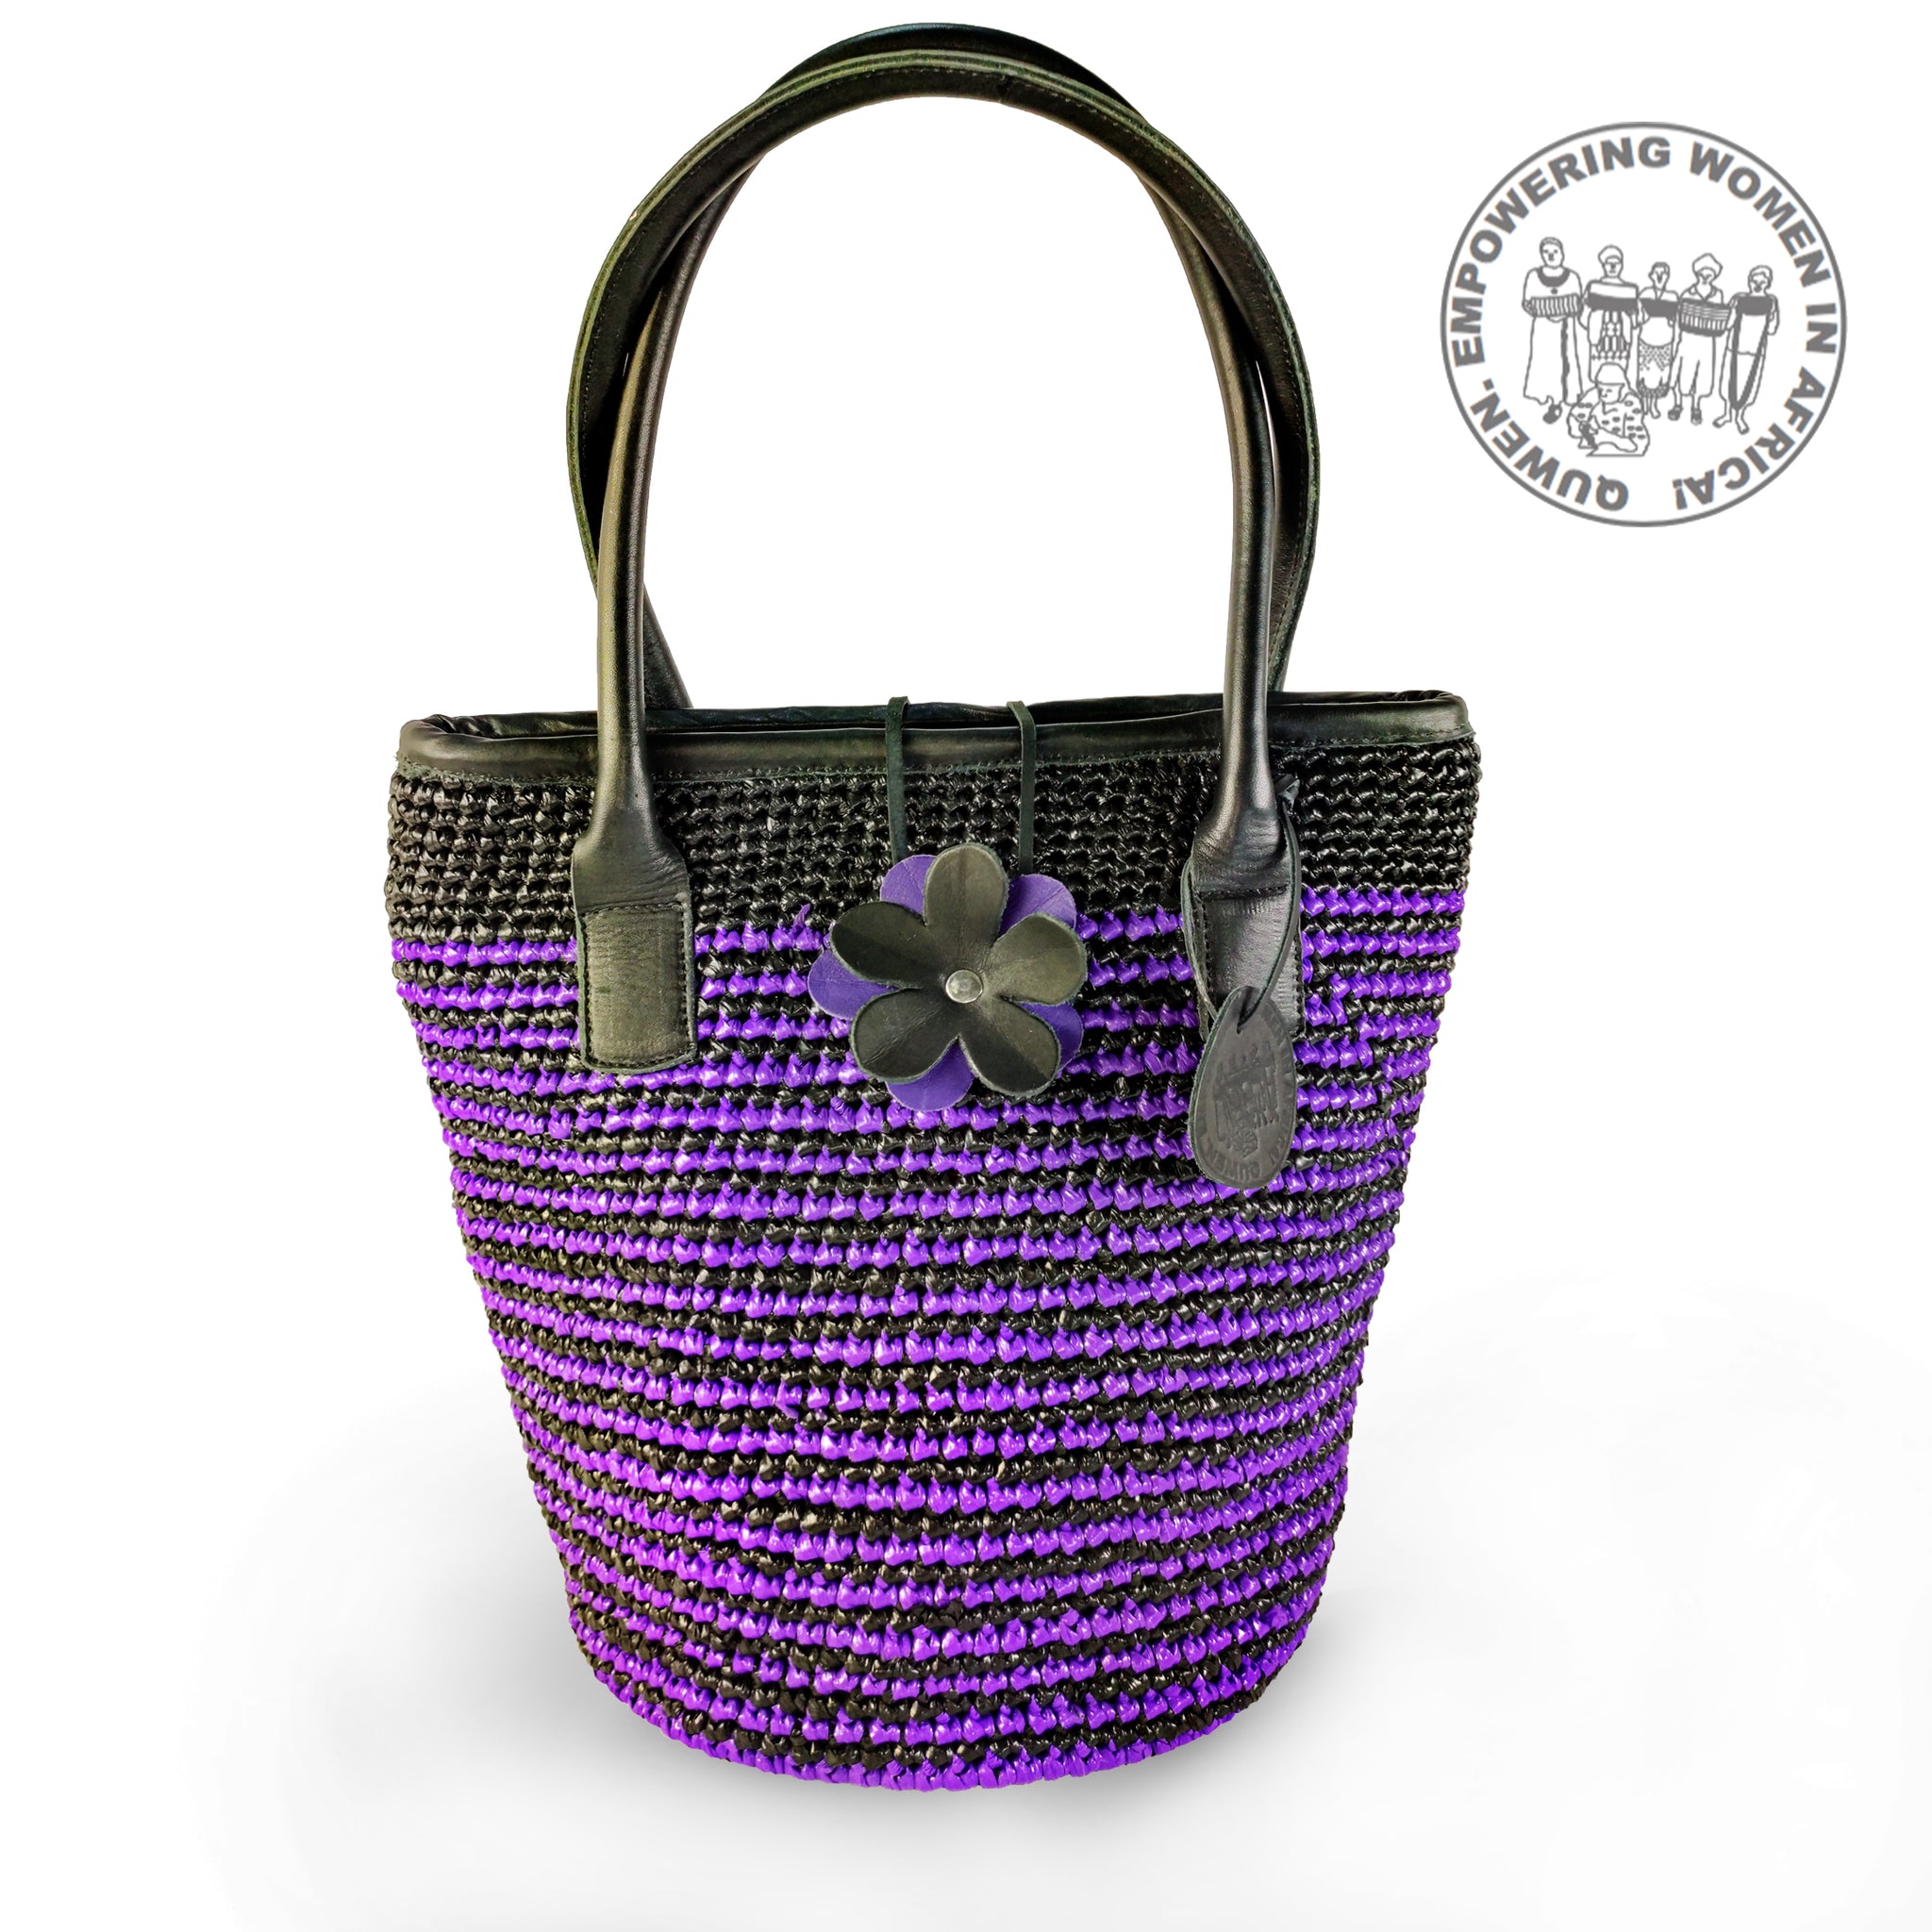 Mathangu Black Purple Bag